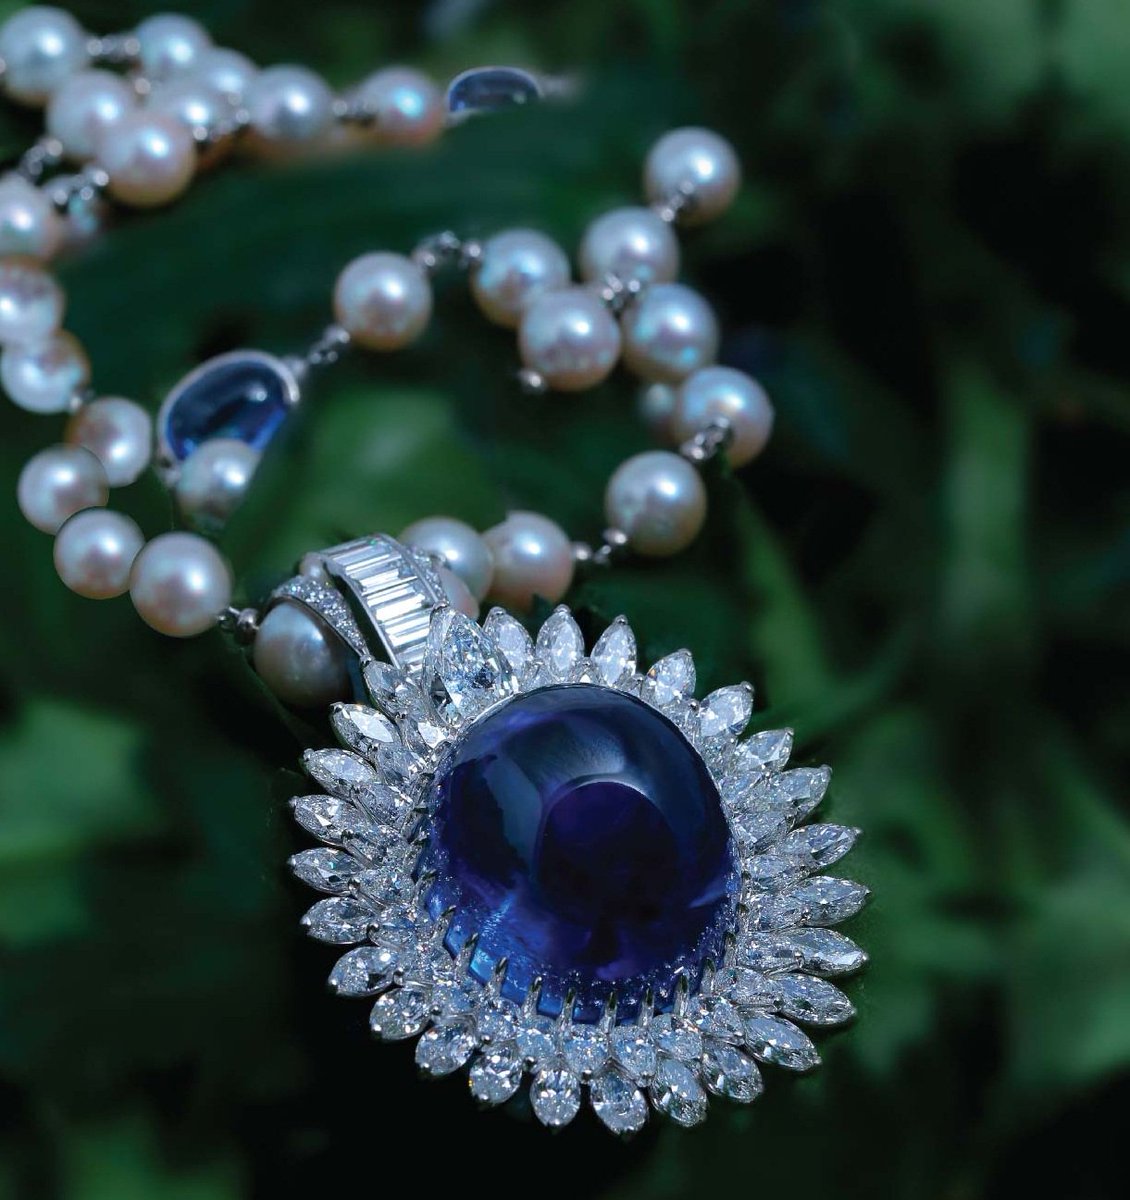 Diamonds and blue sapphires are stunning - add pearls to that combo and you get class!  #luxury #beautiful #rings #jewellerydesign #wedding #instajewelry #colombo #srilanka #lka #highendjewellery #finejewellery #diamond #bluesapphires #sapphire #pearls